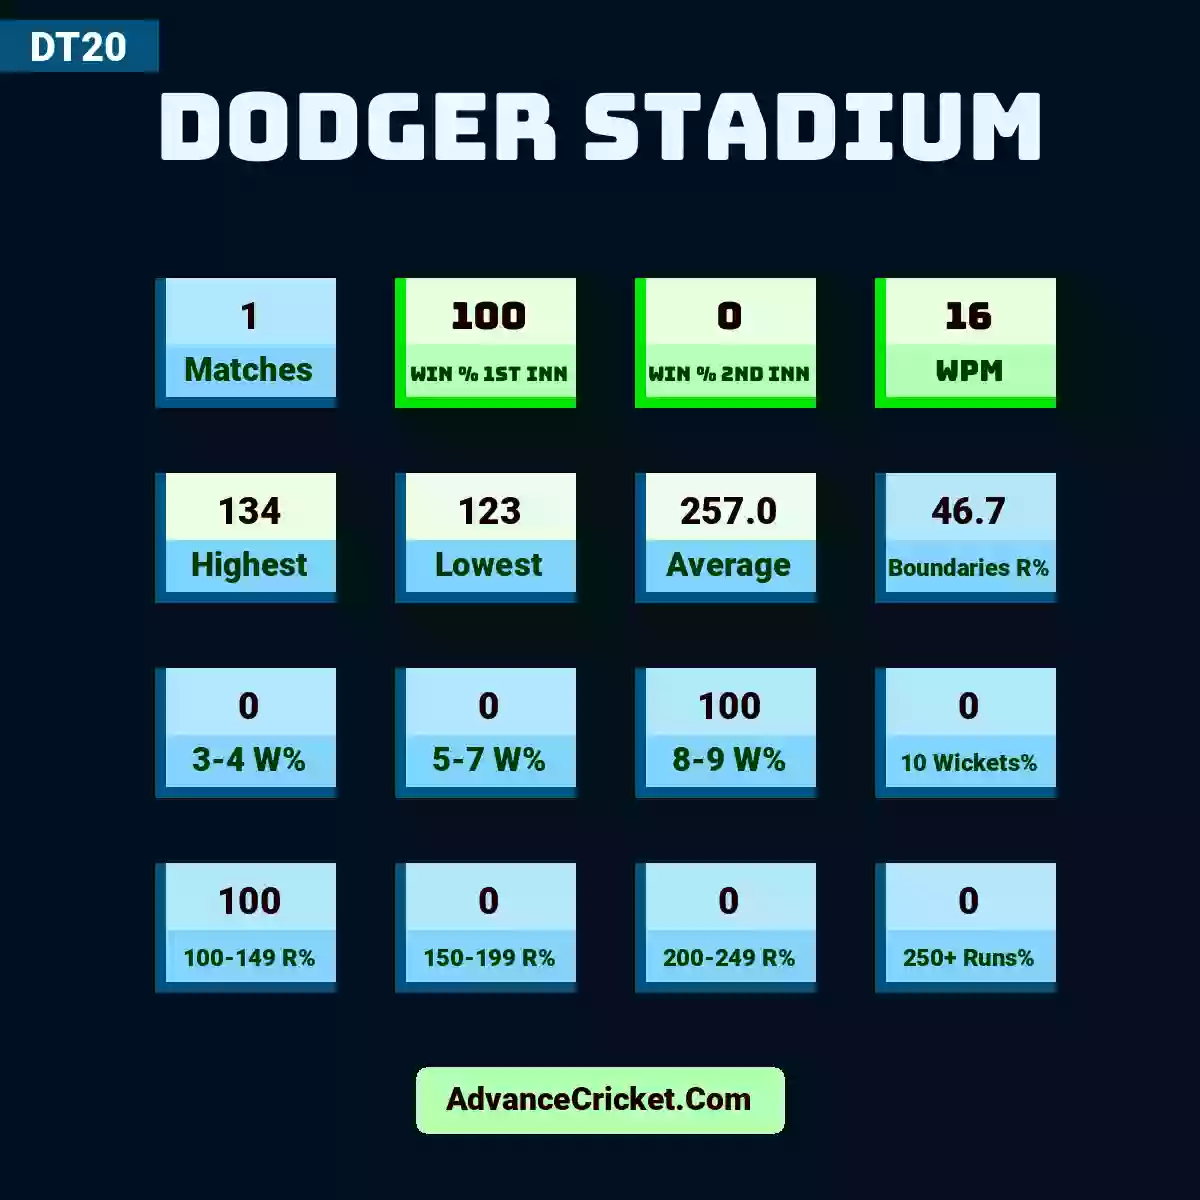 Image showing Dodger Stadium with Matches: 1, Win % 1st Inn: 100, Win % 2nd Inn: 0, WPM: 16, Highest: 134, Lowest: 123, Average: 257.0, Boundaries R%: 46.7, 3-4 W%: 0, 5-7 W%: 0, 8-9 W%: 100, 10 Wickets%: 0, 100-149 R%: 100, 150-199 R%: 0, 200-249 R%: 0, 250+ Runs%: 0.